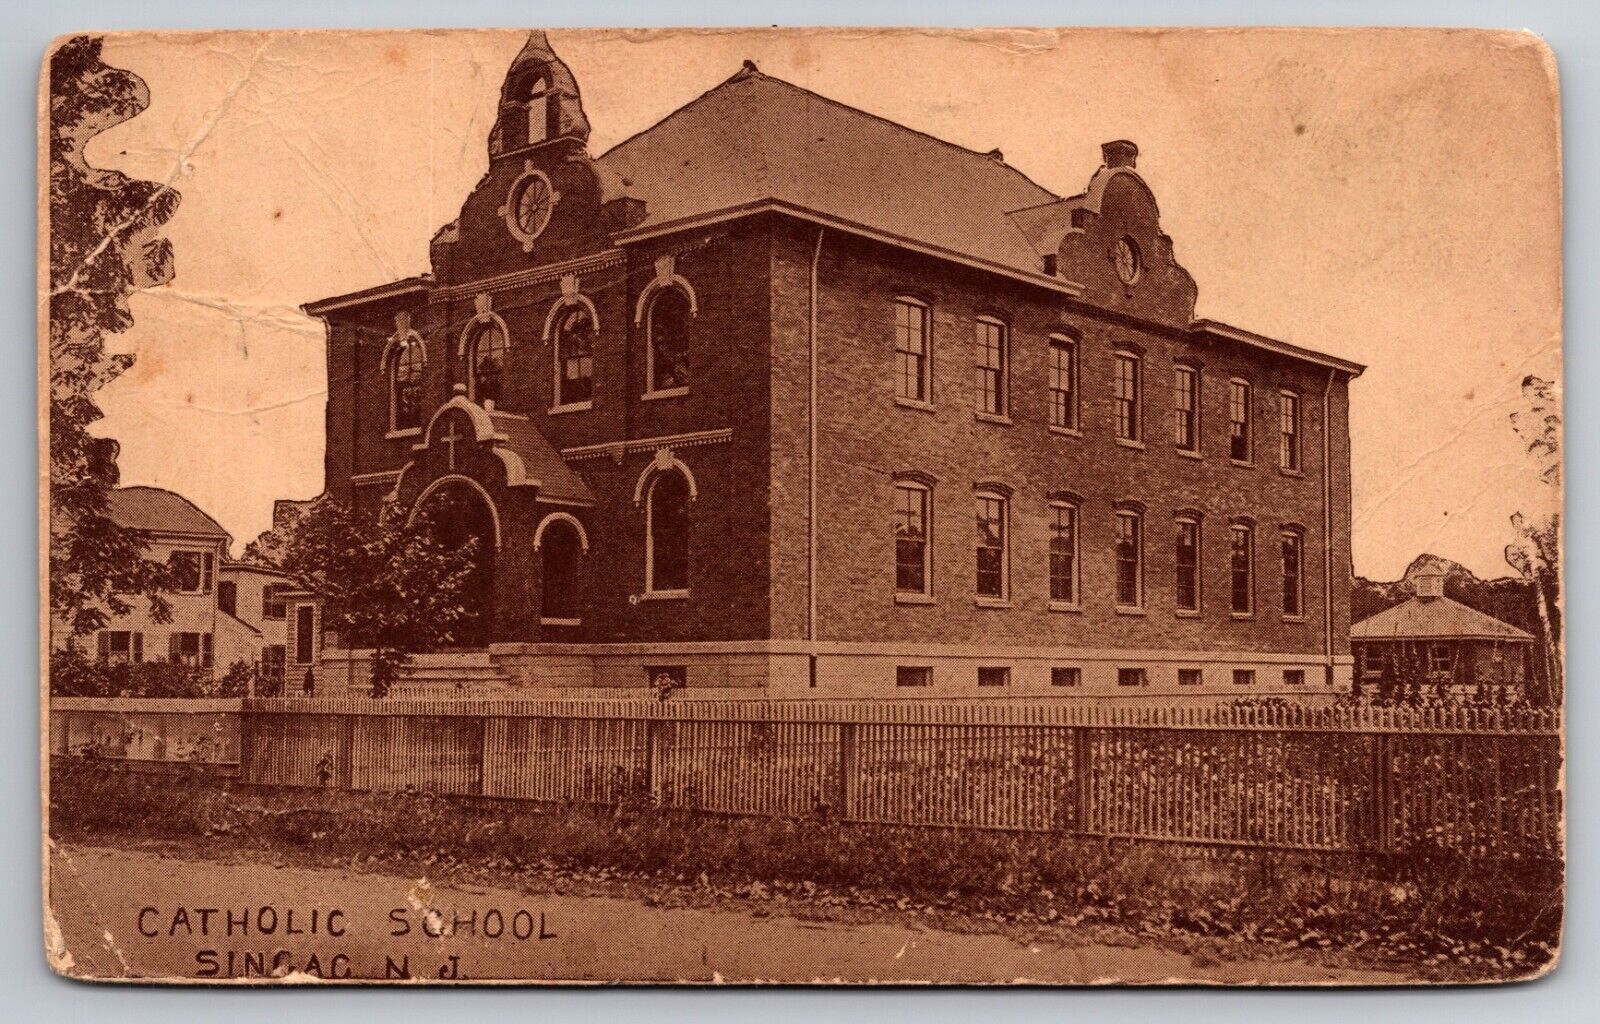 Catholic School Building Singac New Jersey c1915 Postcard